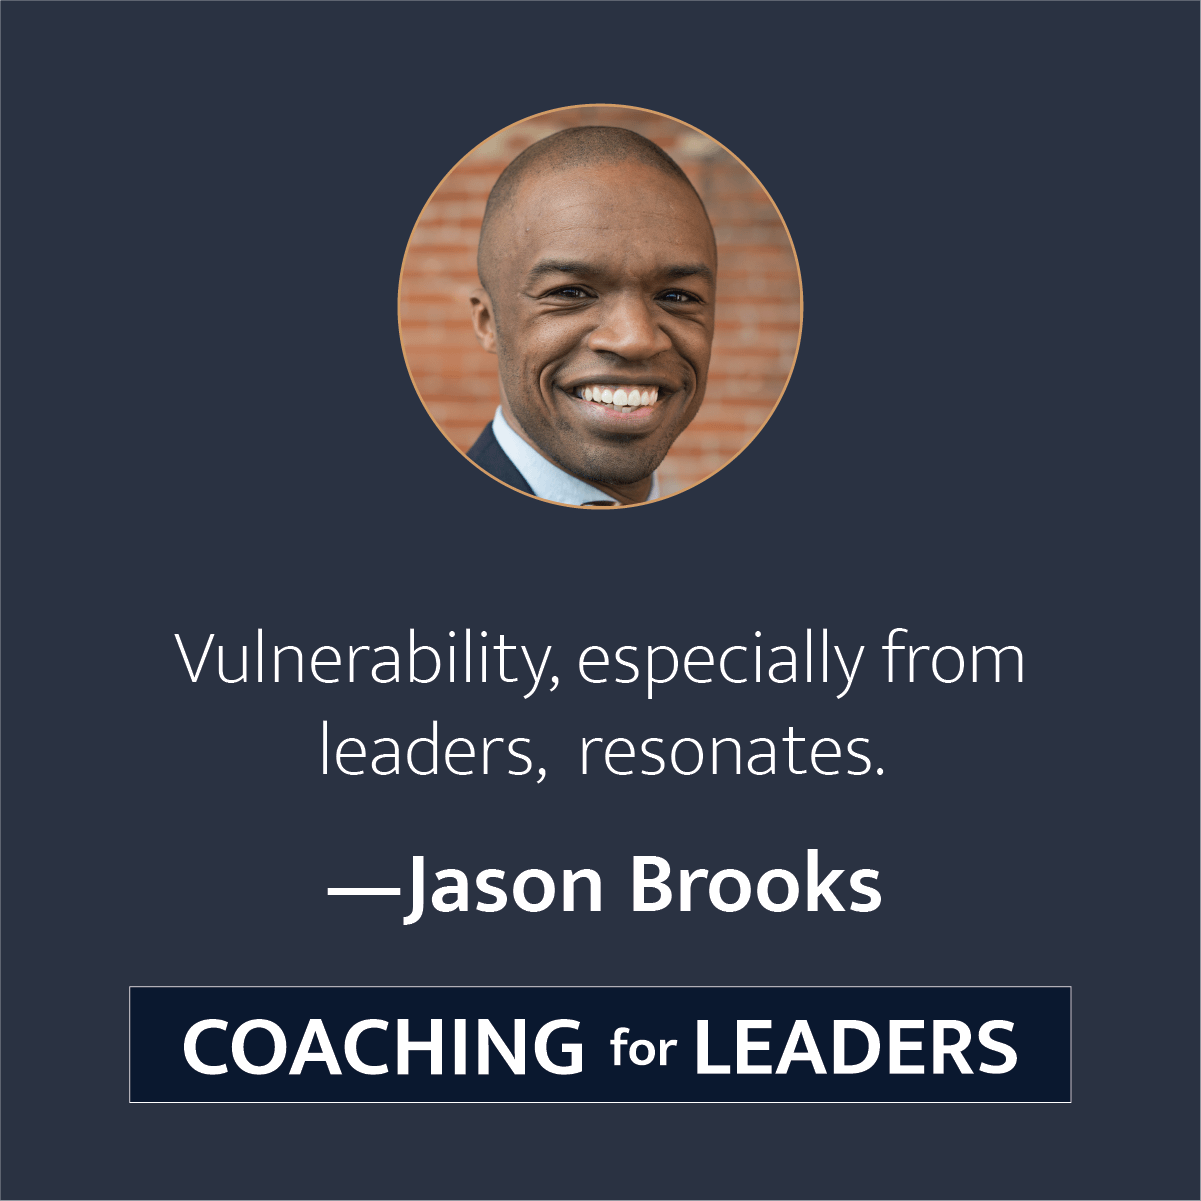 Vulnerability, especially in leaders, resonates.